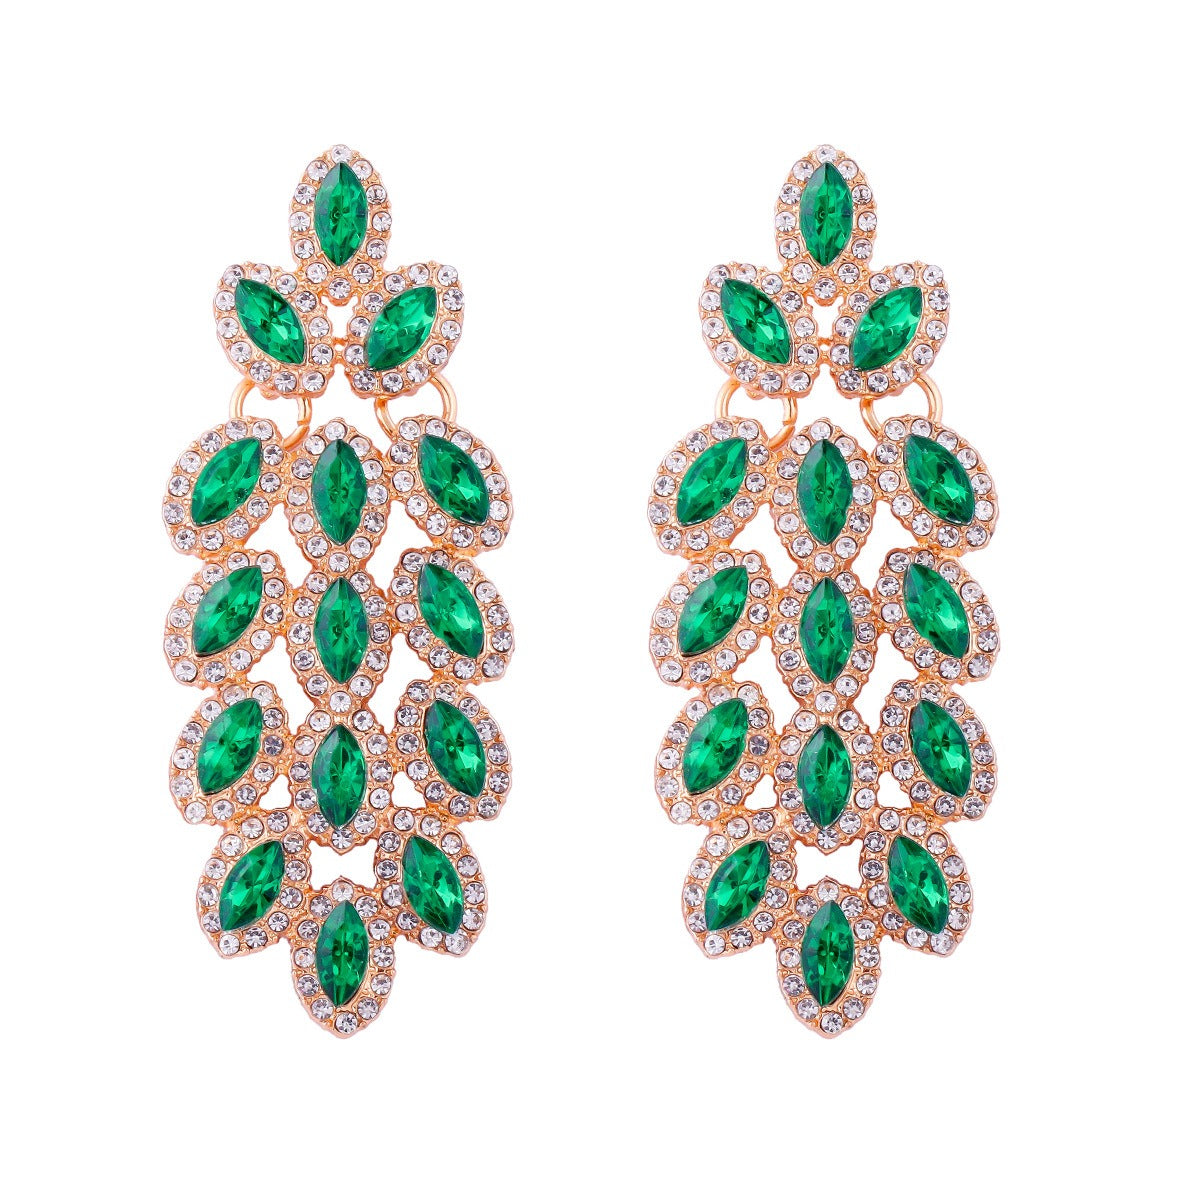 Retro personalized geometric stud earrings full of diamonds and tassels light luxury style wedding earrings